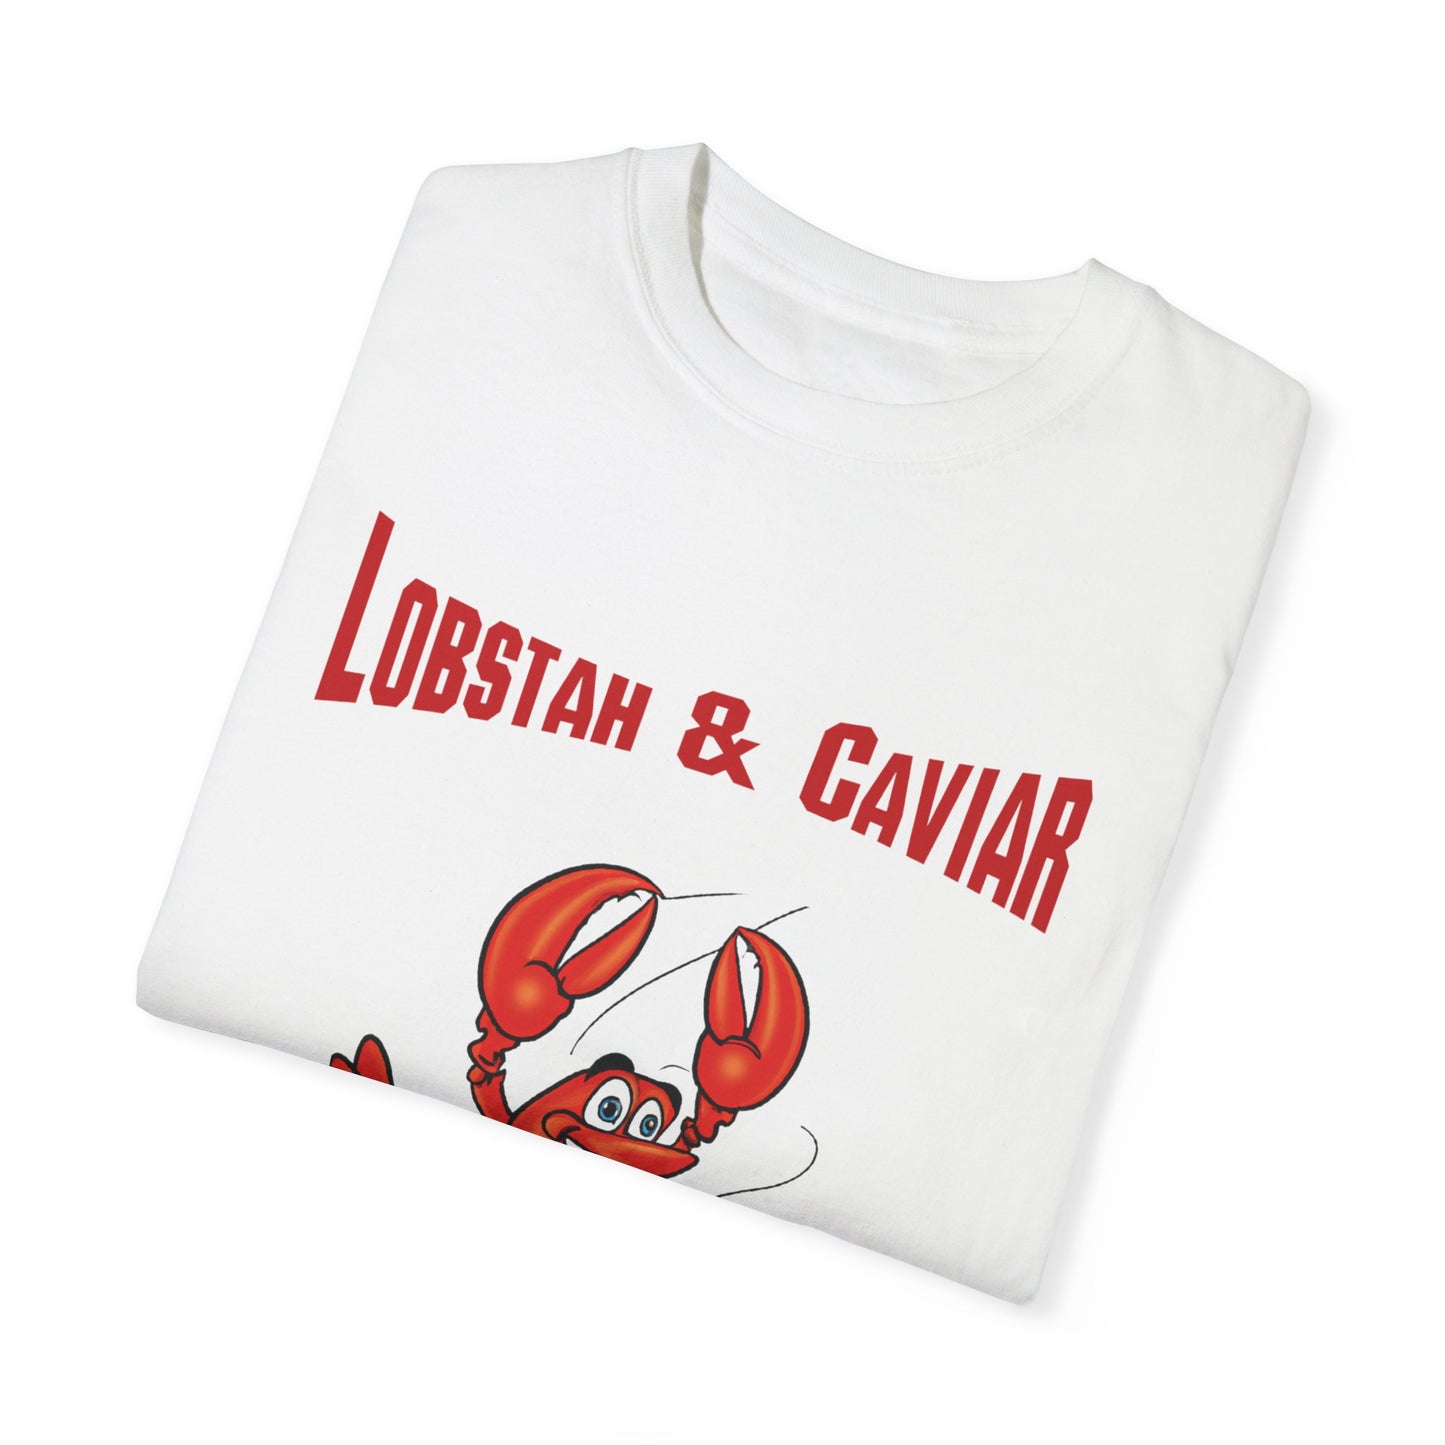 "Lobstah" & Caviar Boston T-Shirt